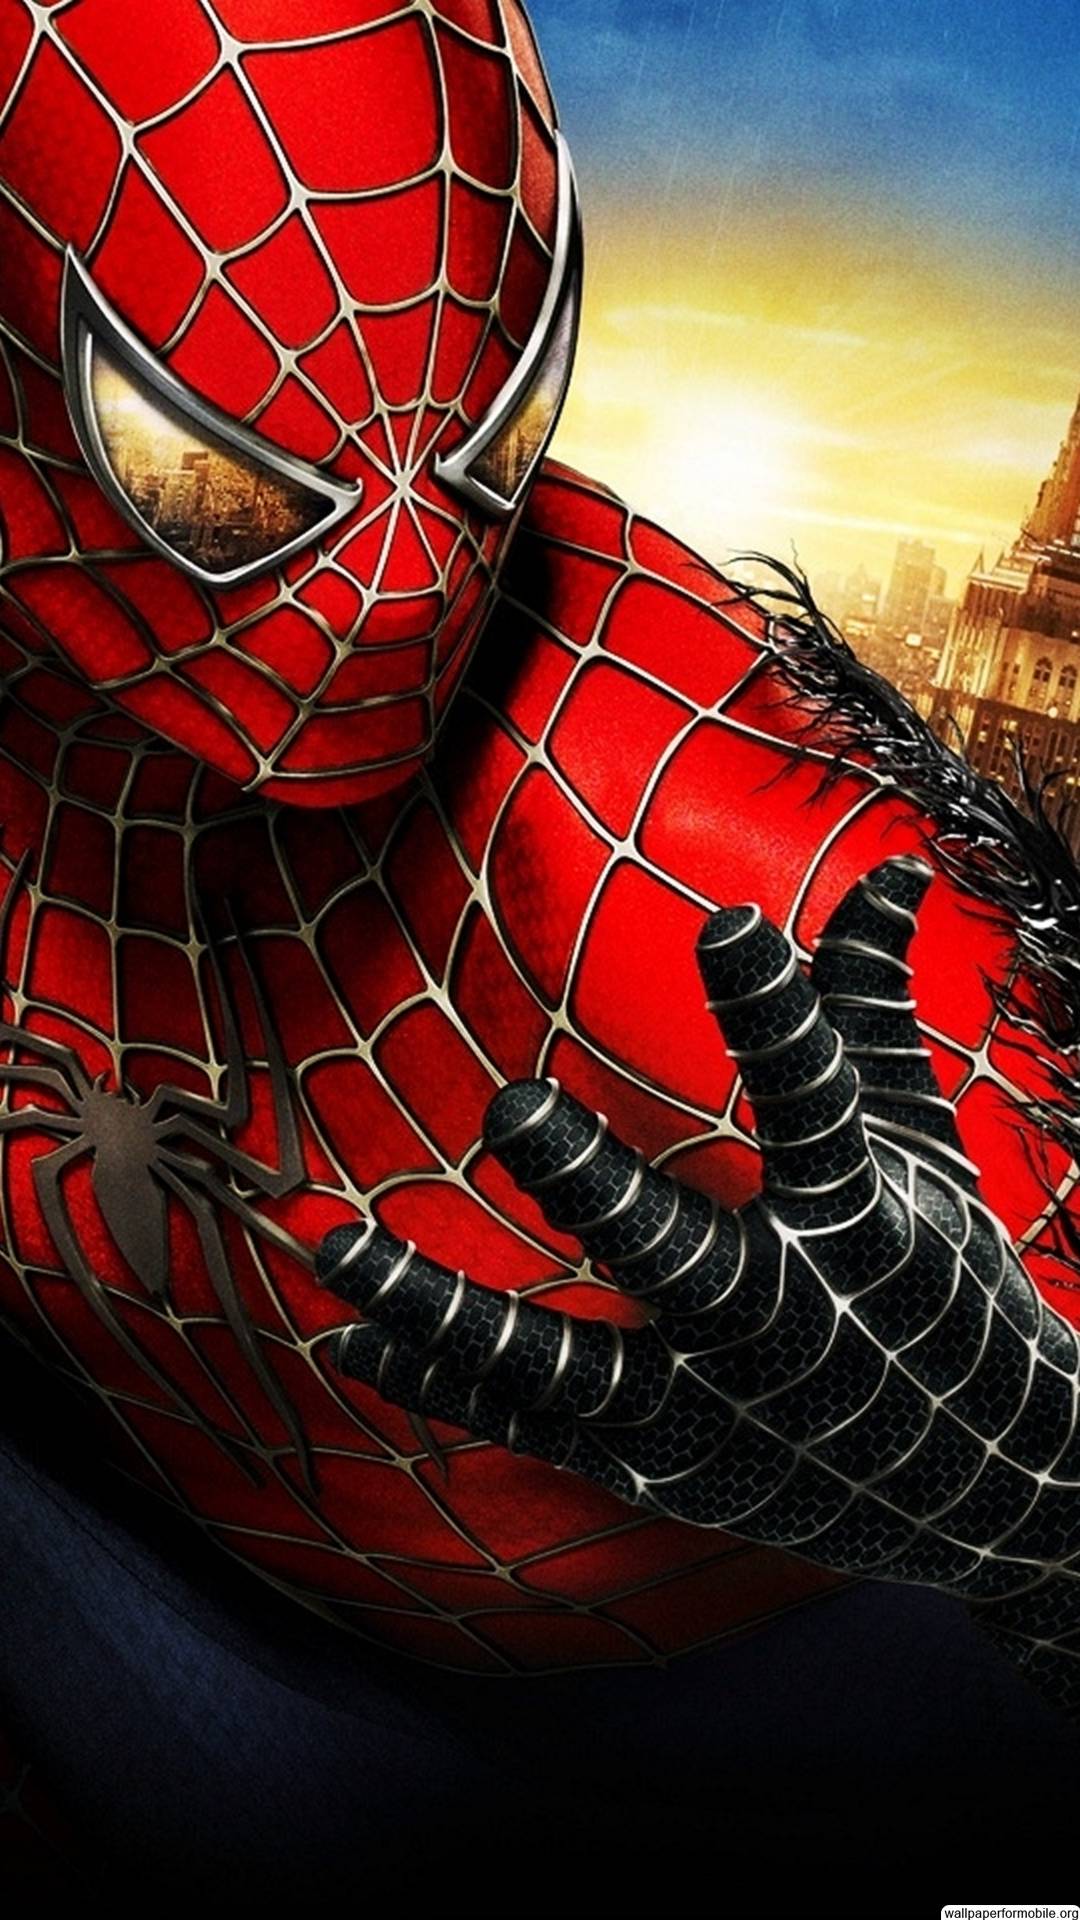 hd wallpaper download for mobile,spider man,superhero,fictional character,hero